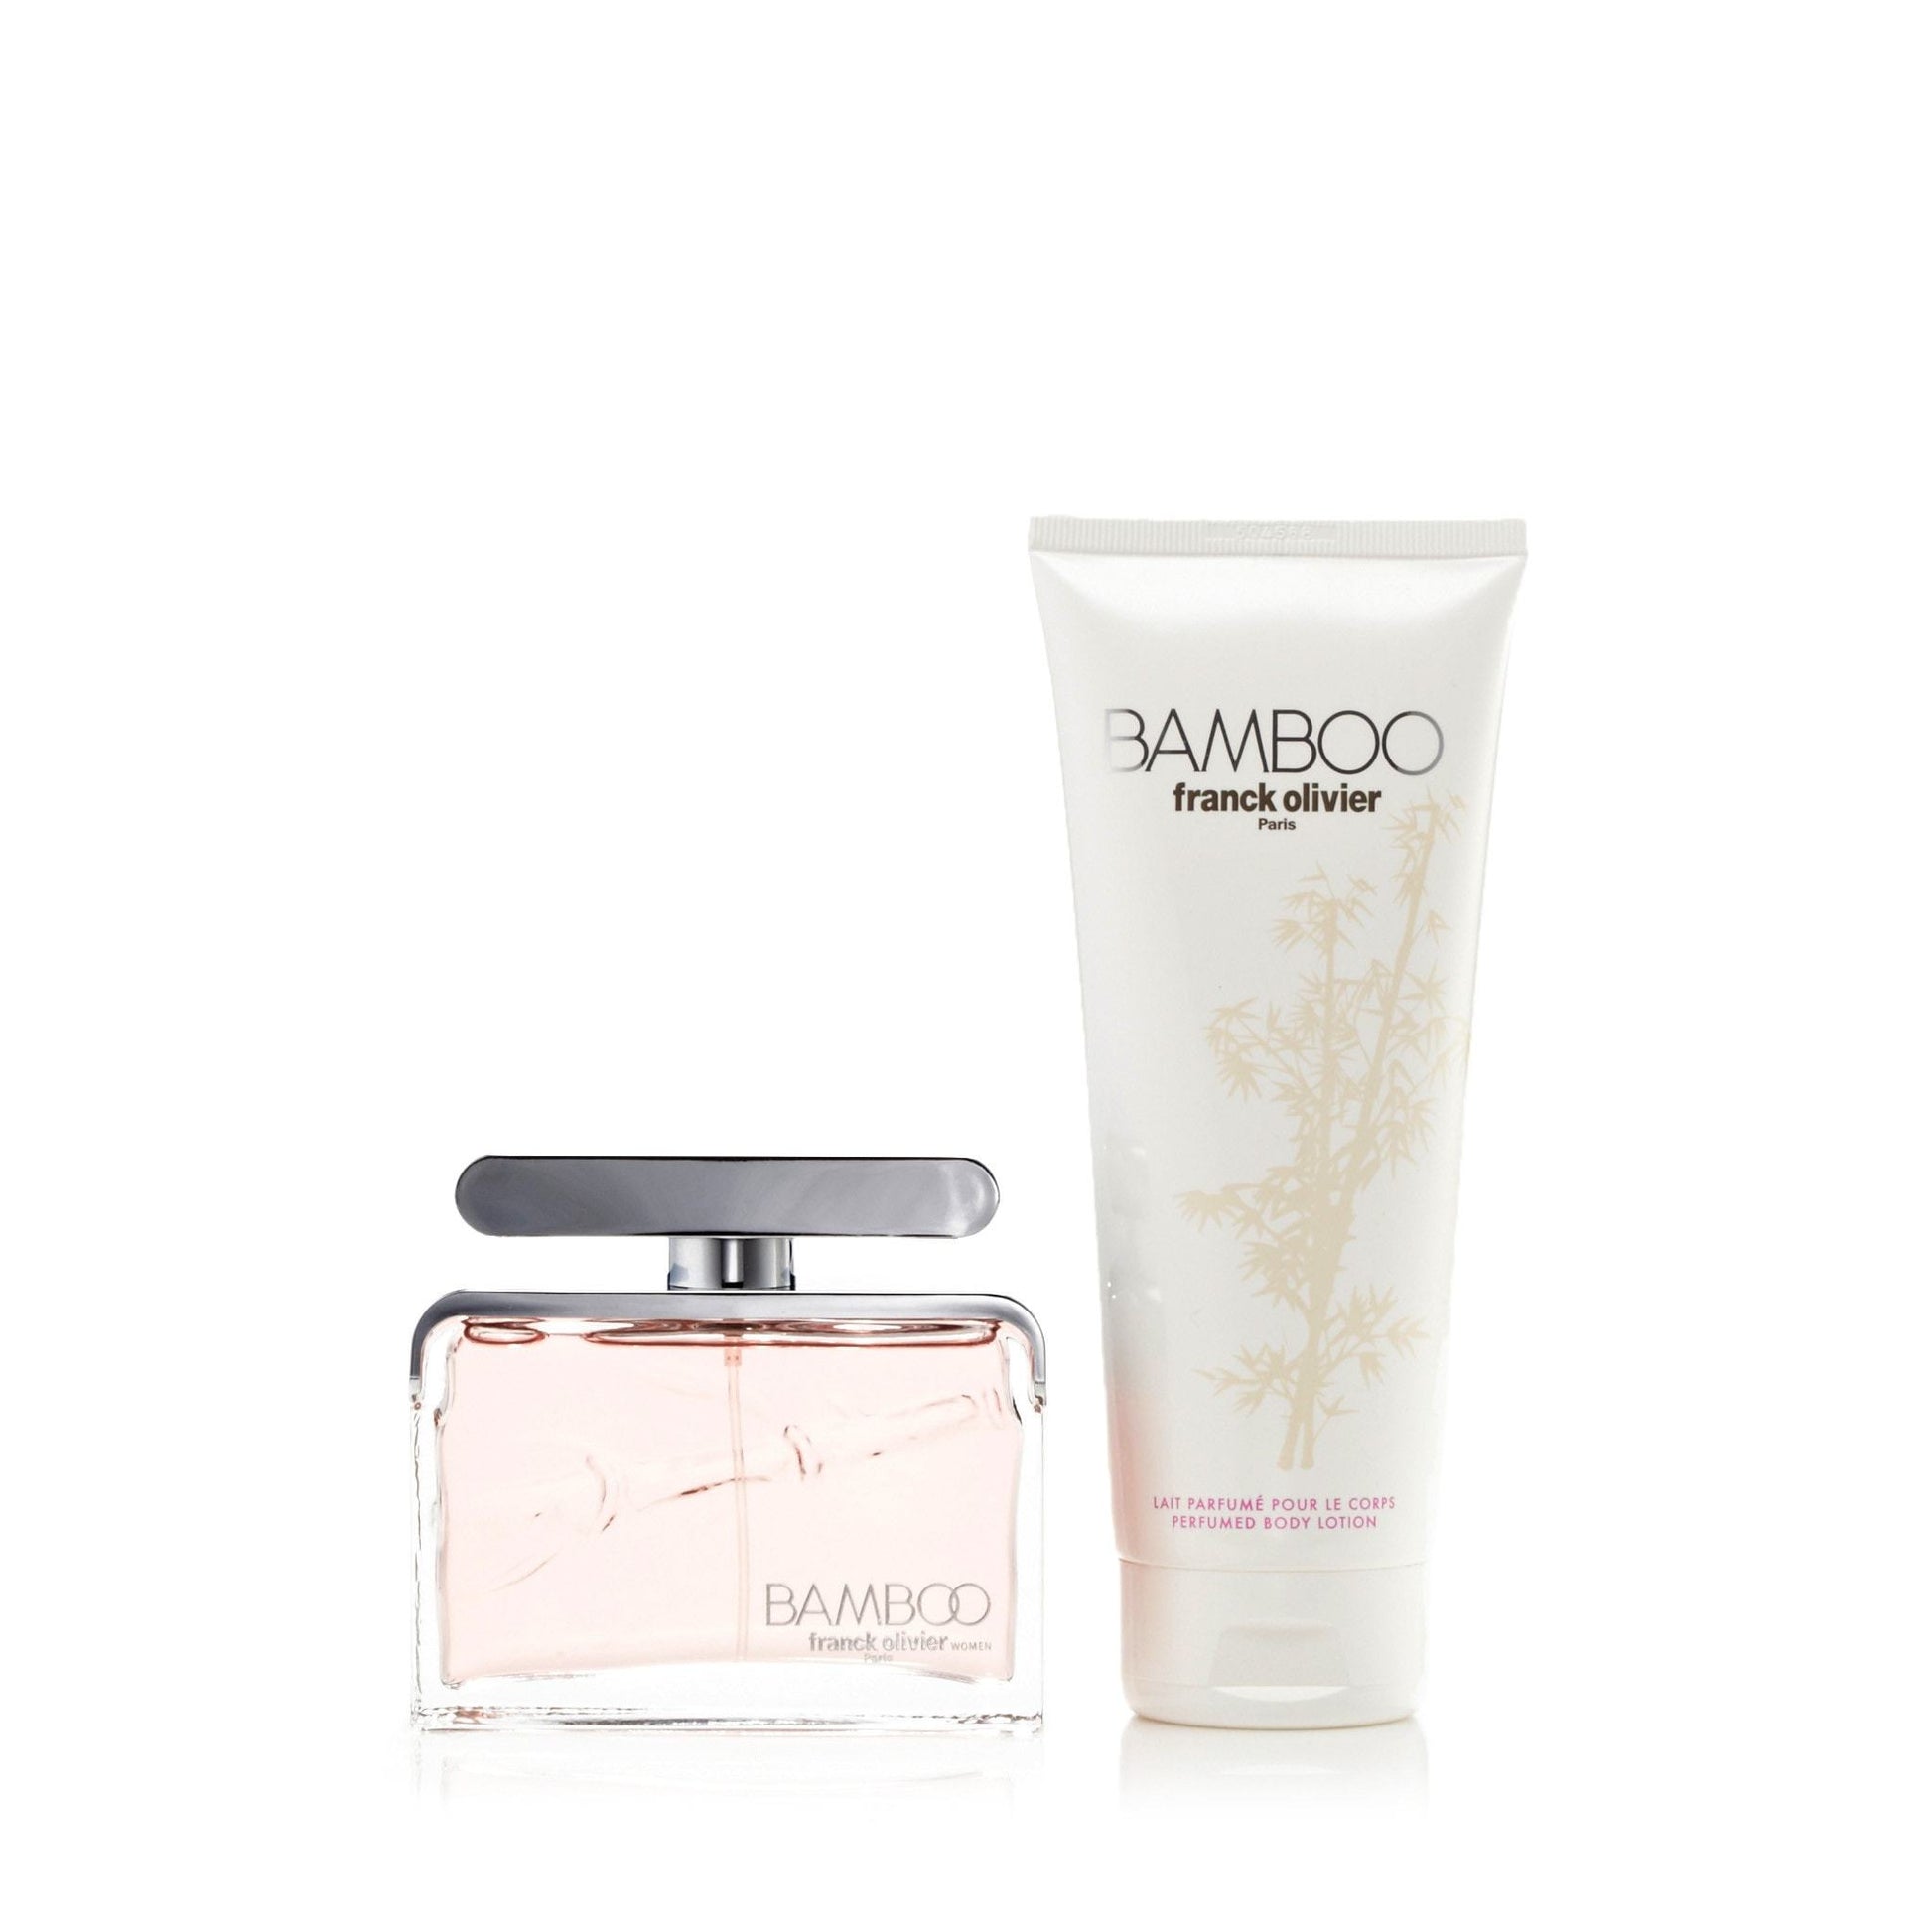 Bamboo Eau de Parfume Gift Set for Women, Product image 2